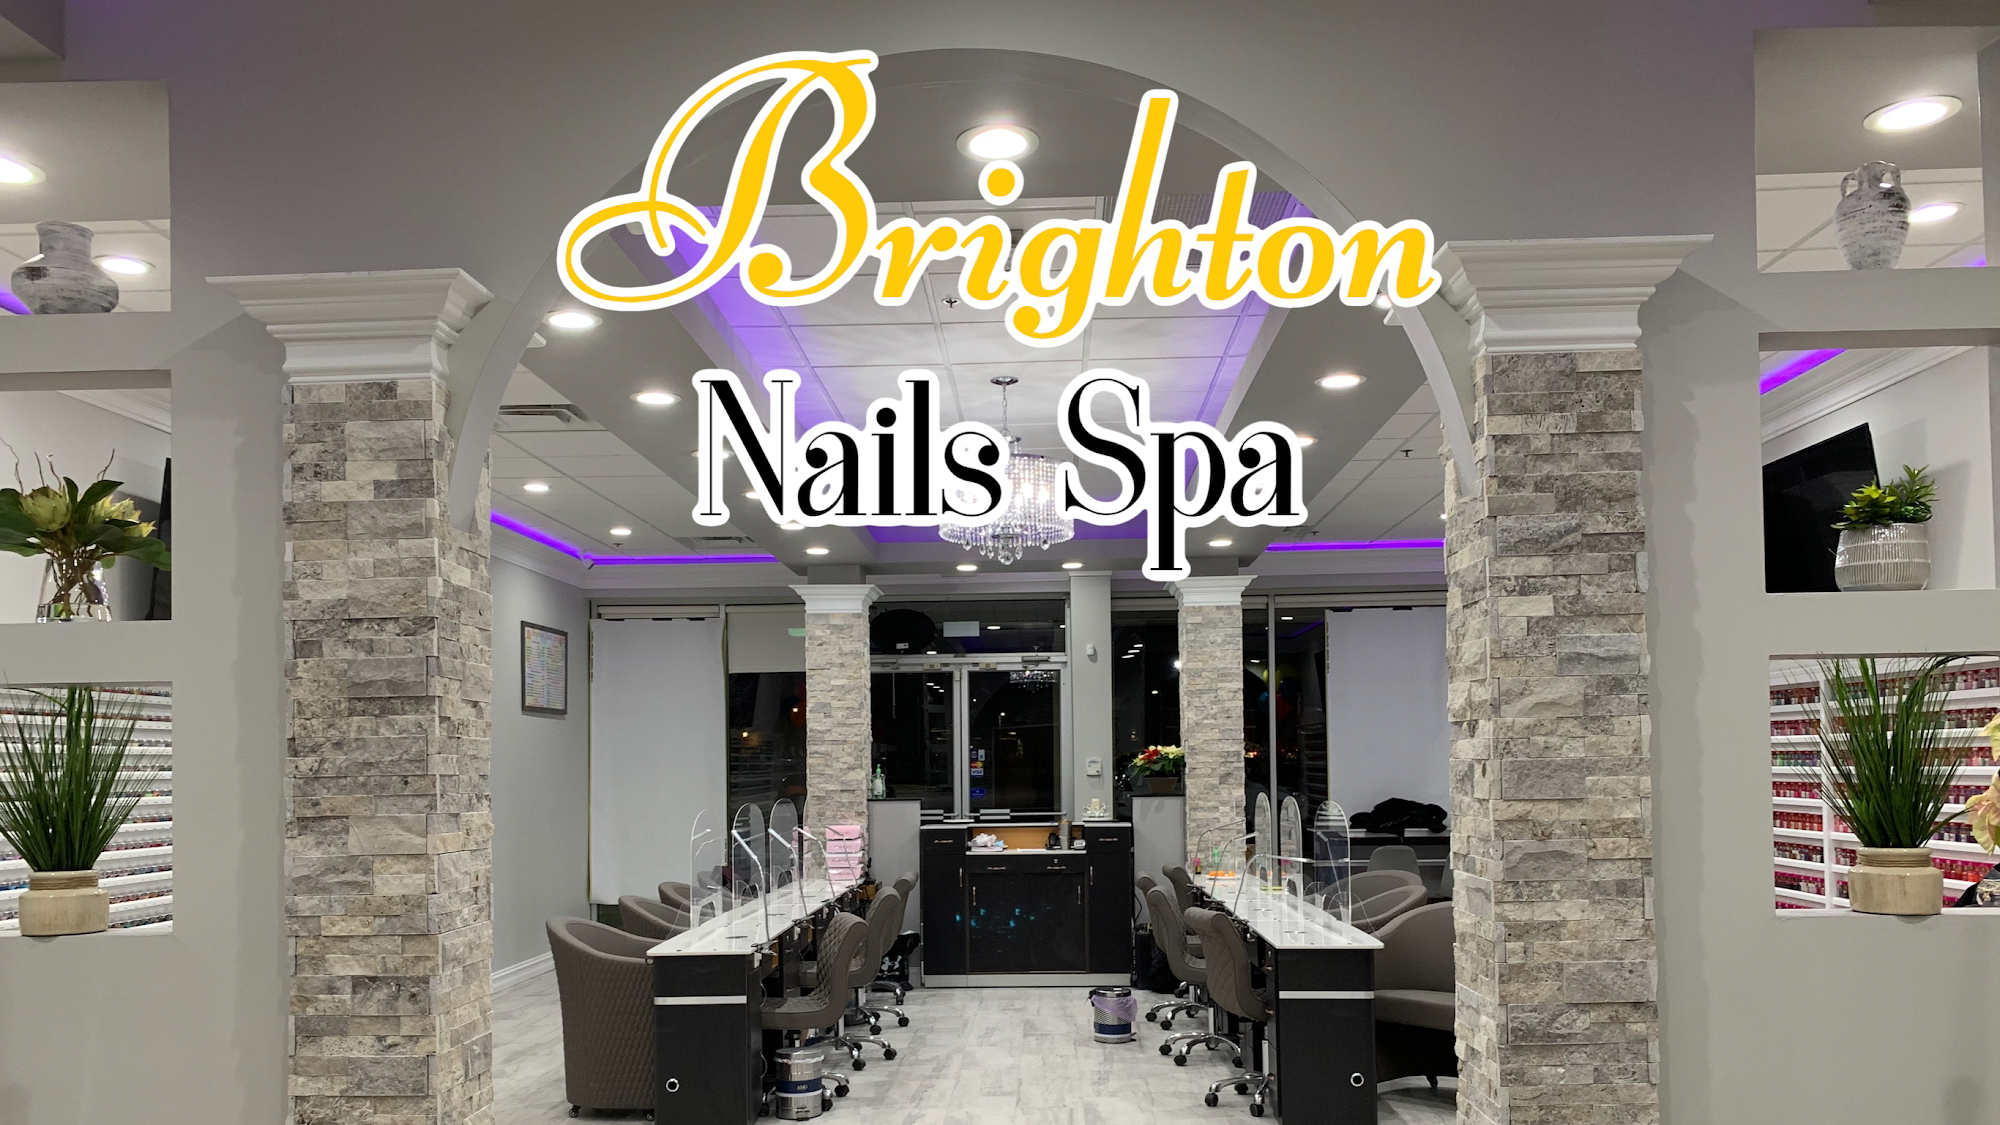 Brighton Nails Spa